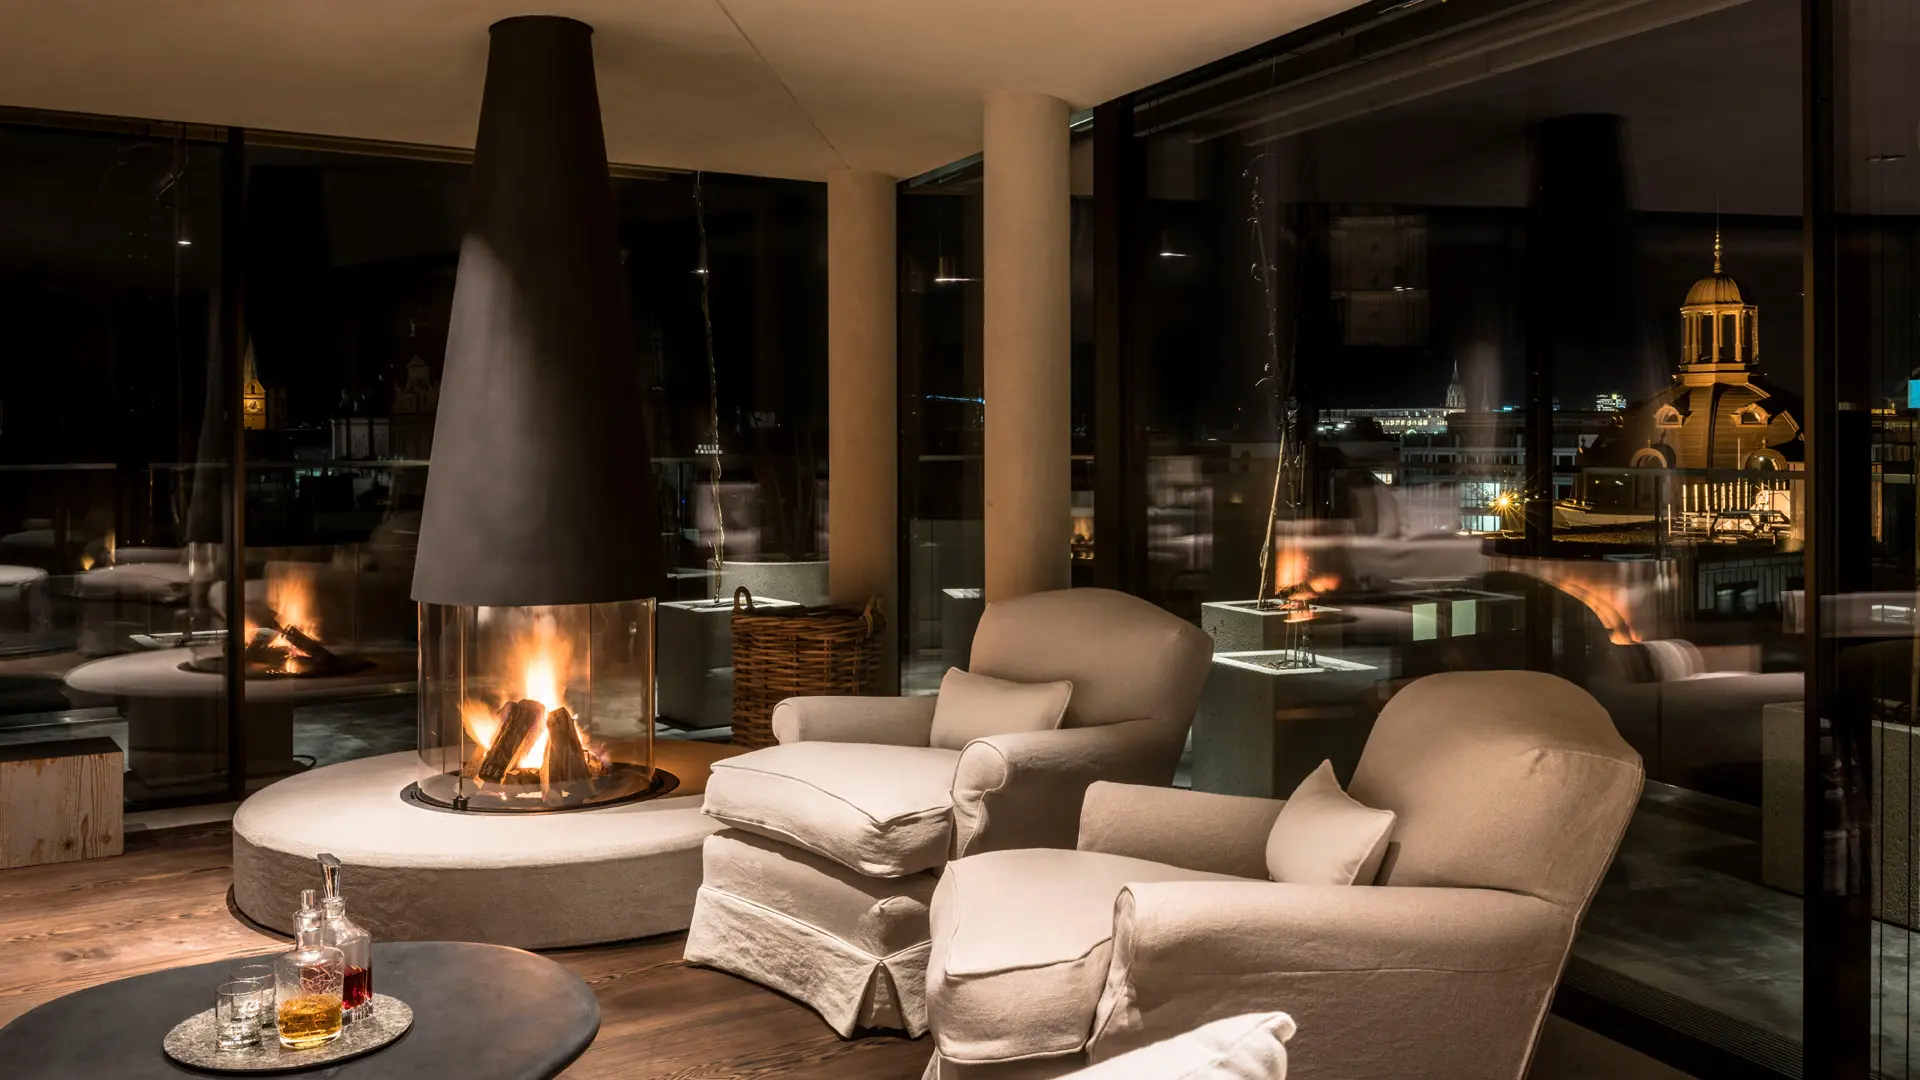 Hotel review Accommodation' - Bayerischer Hof - 4